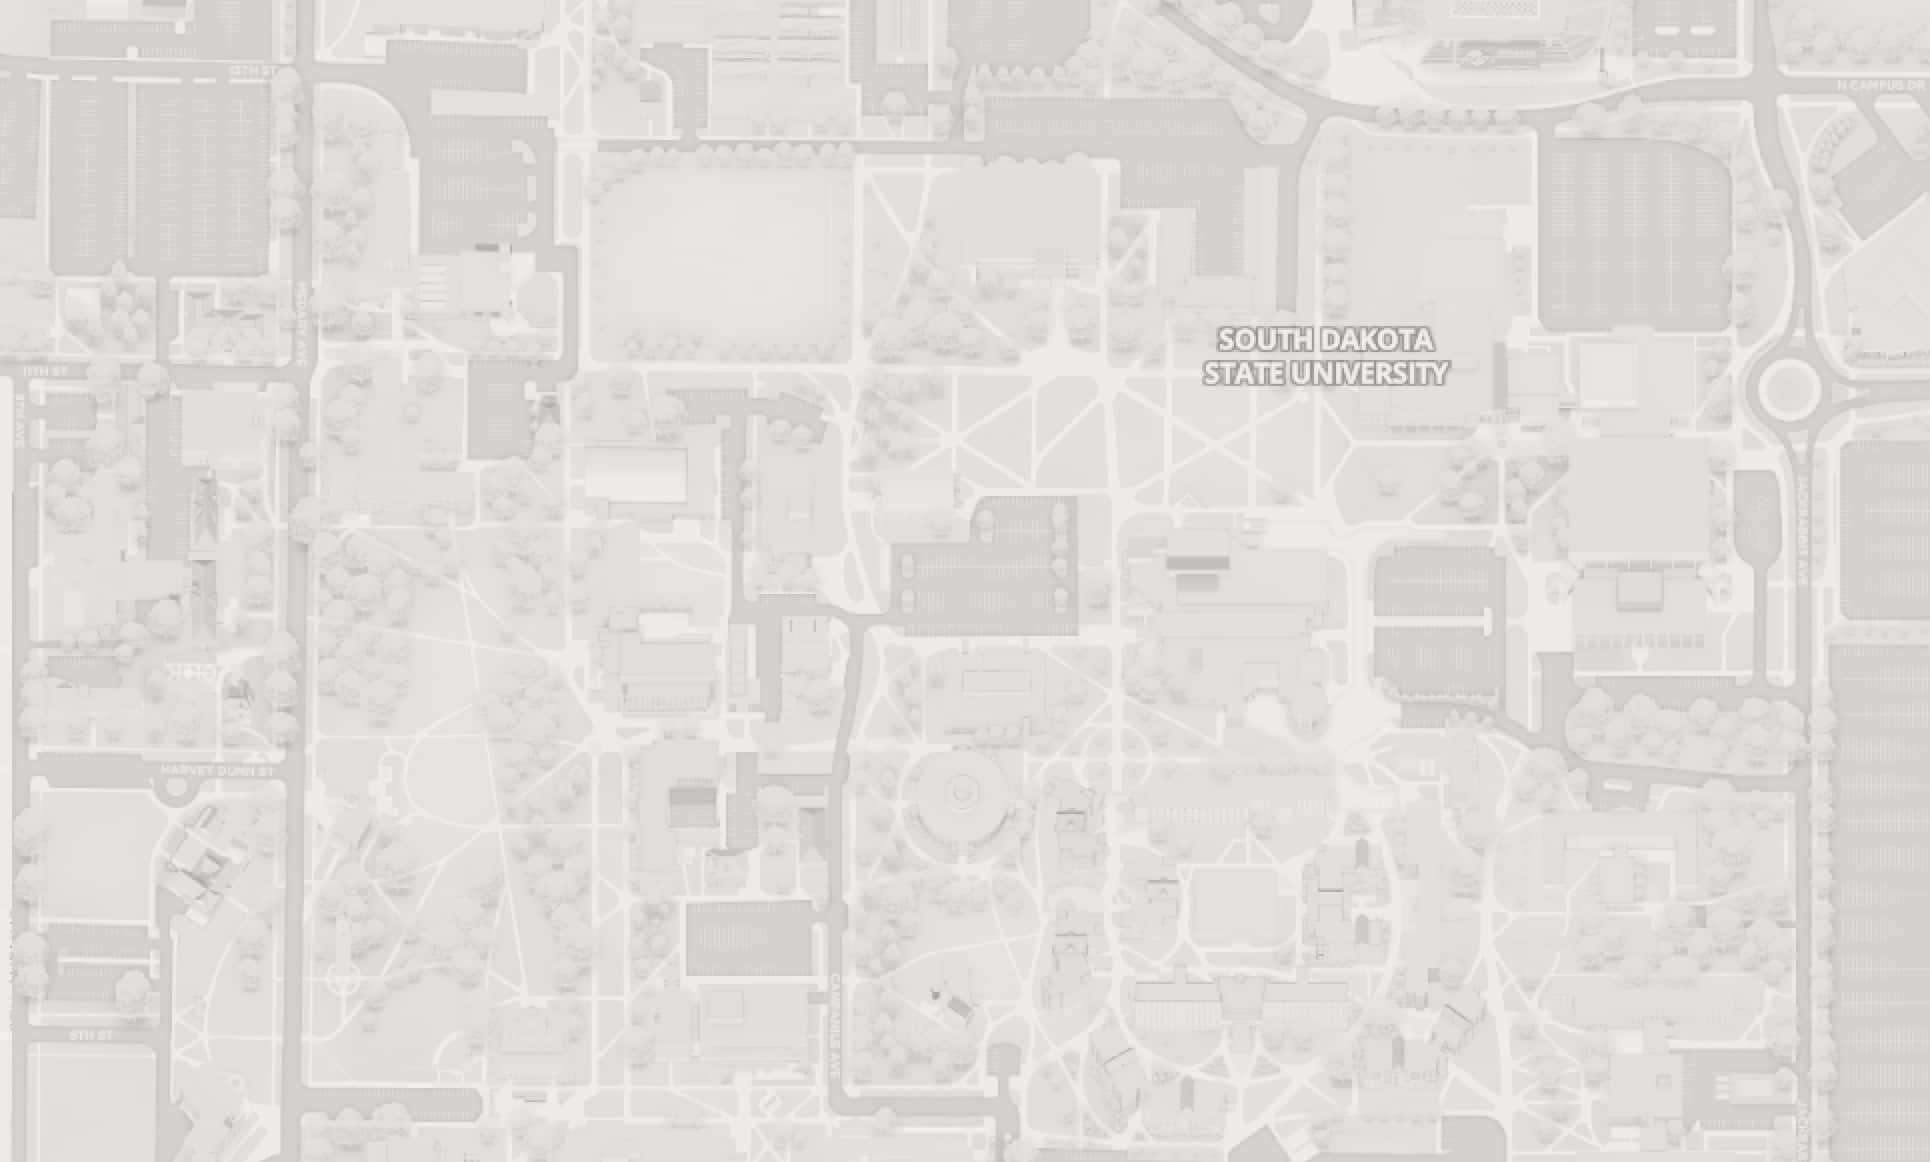 Map of South Dakota State University campus